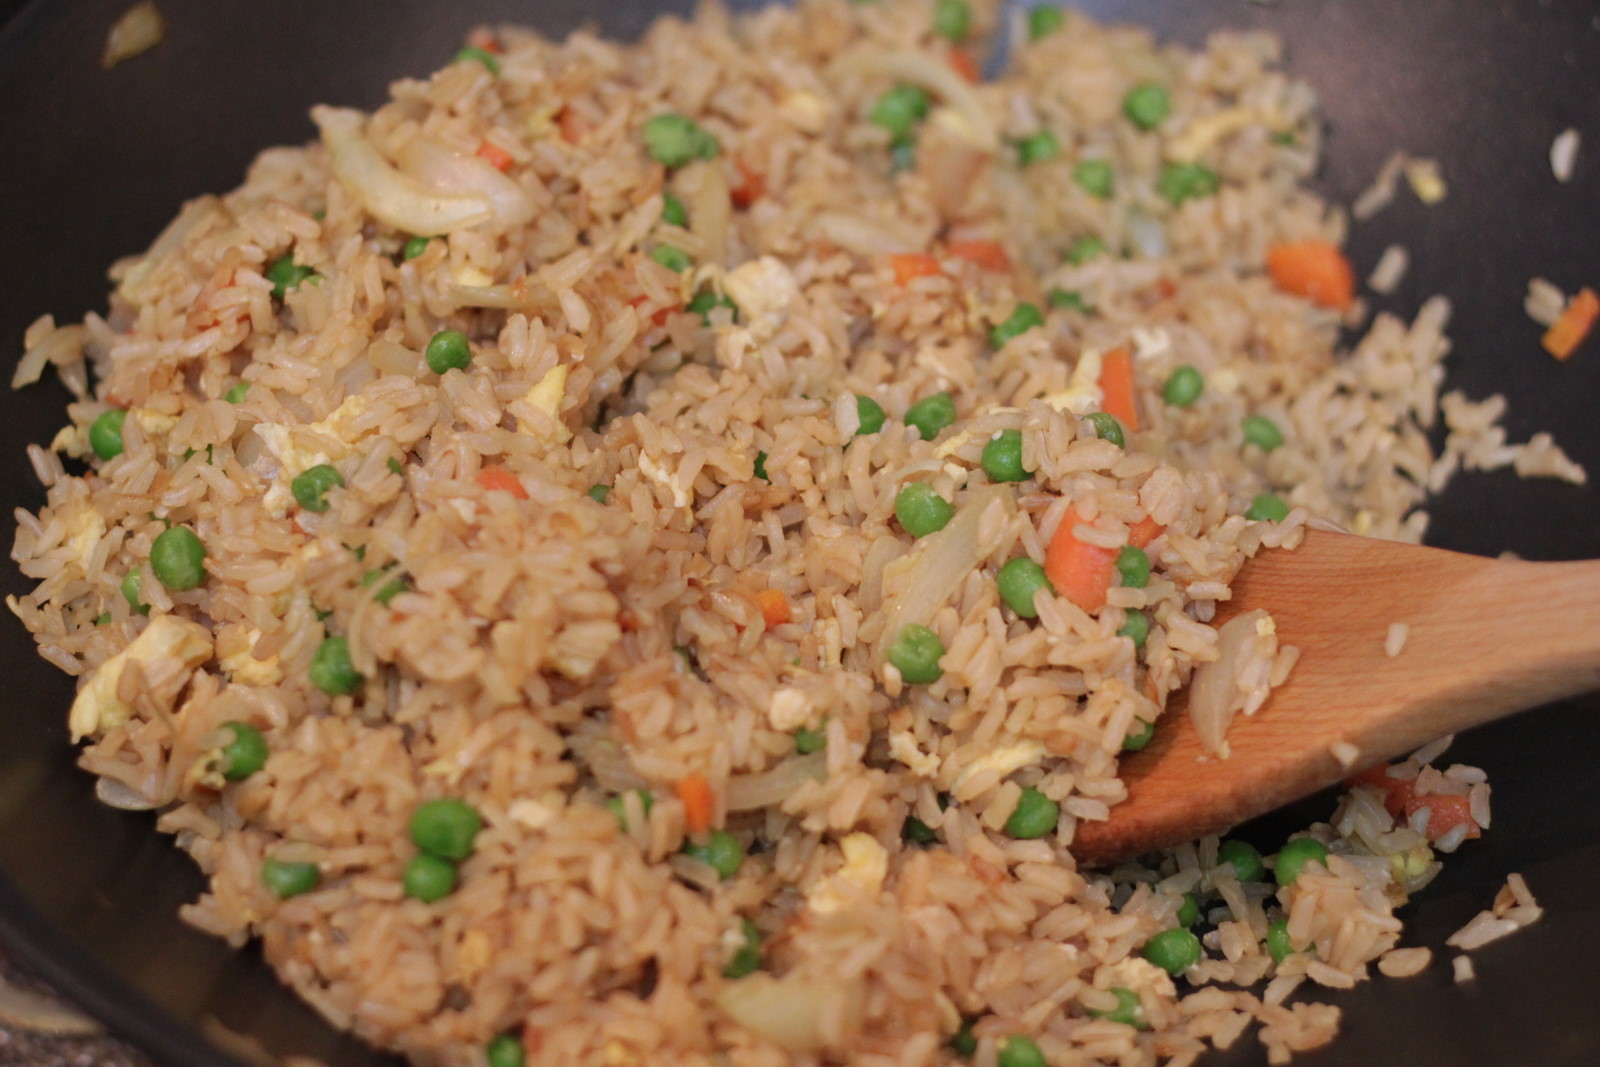 Wholesome Dinner Tonight: Teriyaki Chicken with Stir Fried Brown Rice